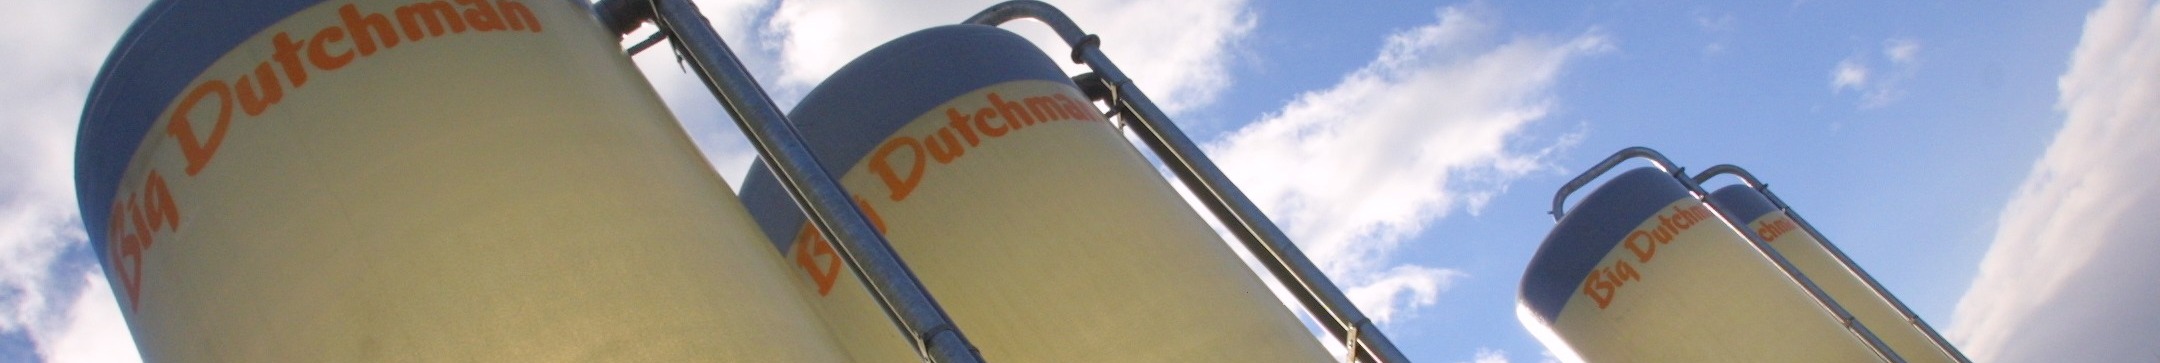 Big Dutchman International GmbH background